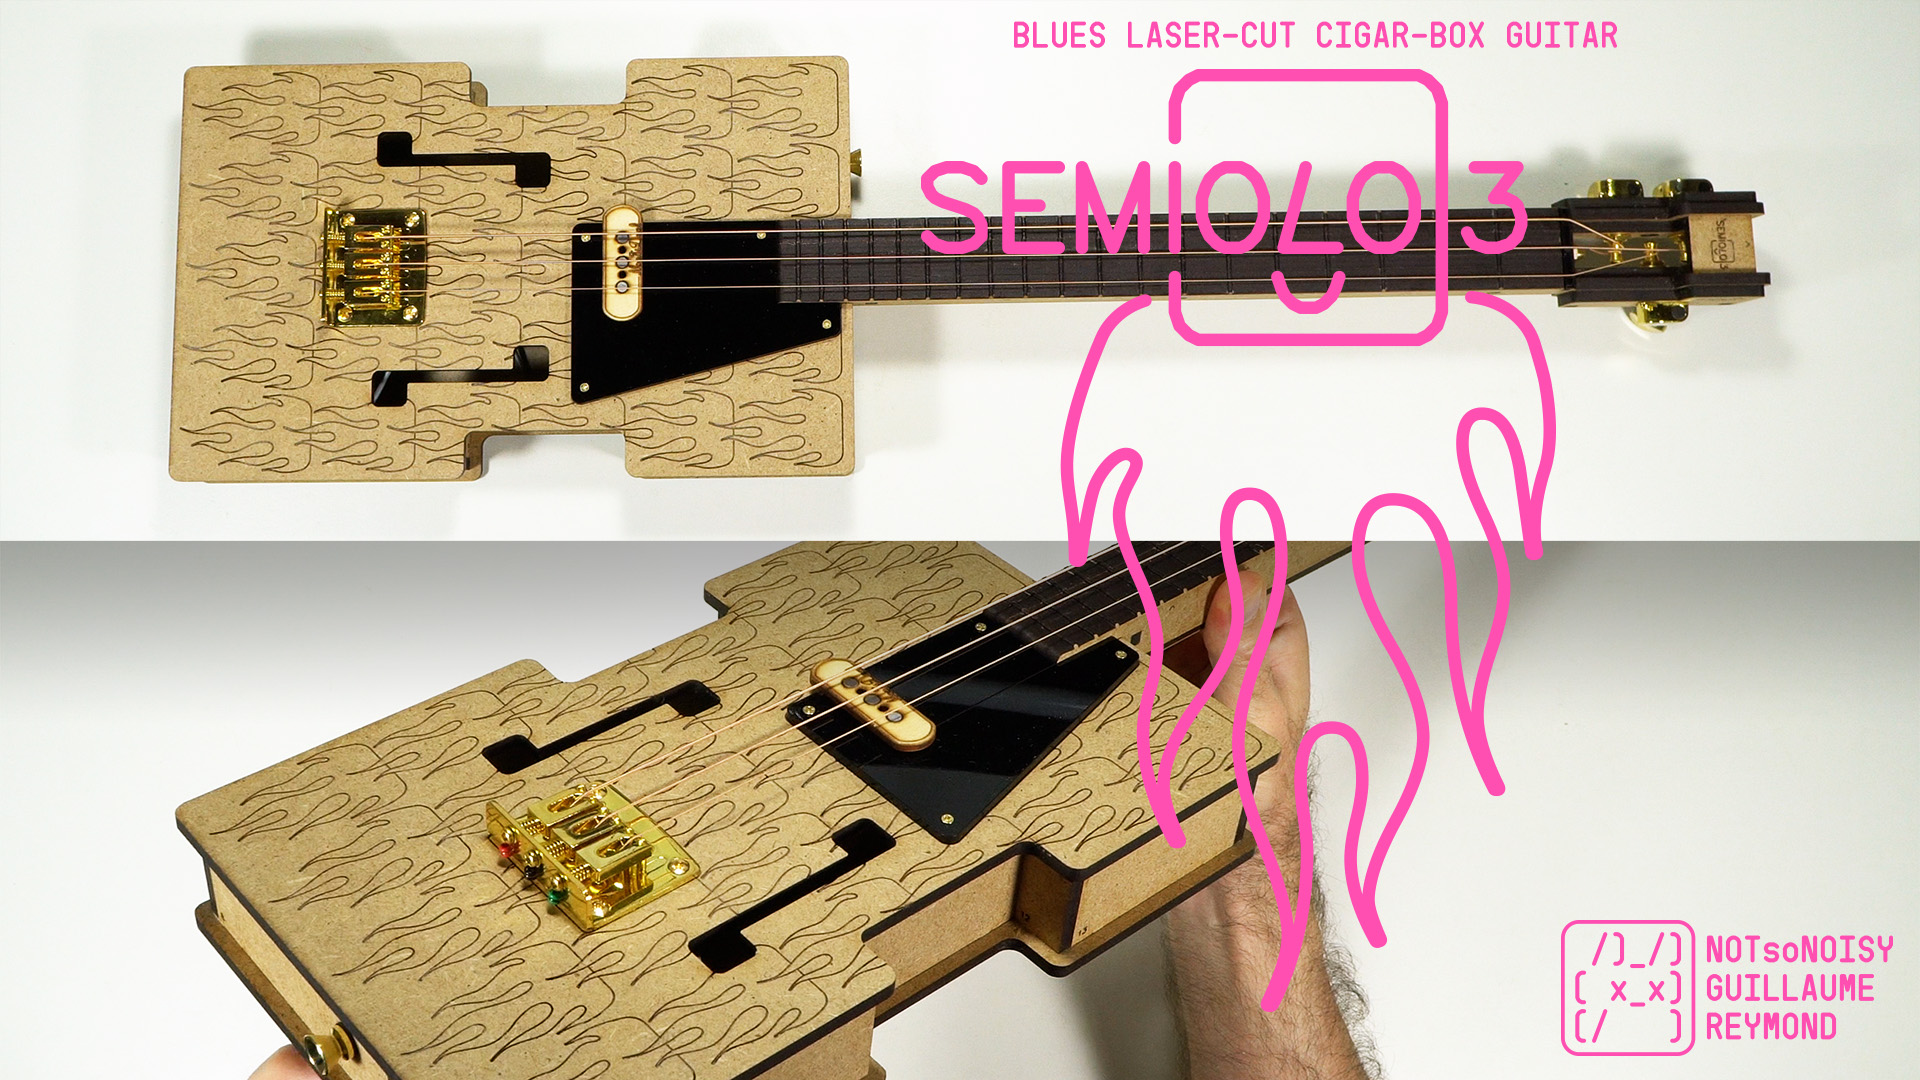 SEMIOLO3 laser cut cigar-box guitar